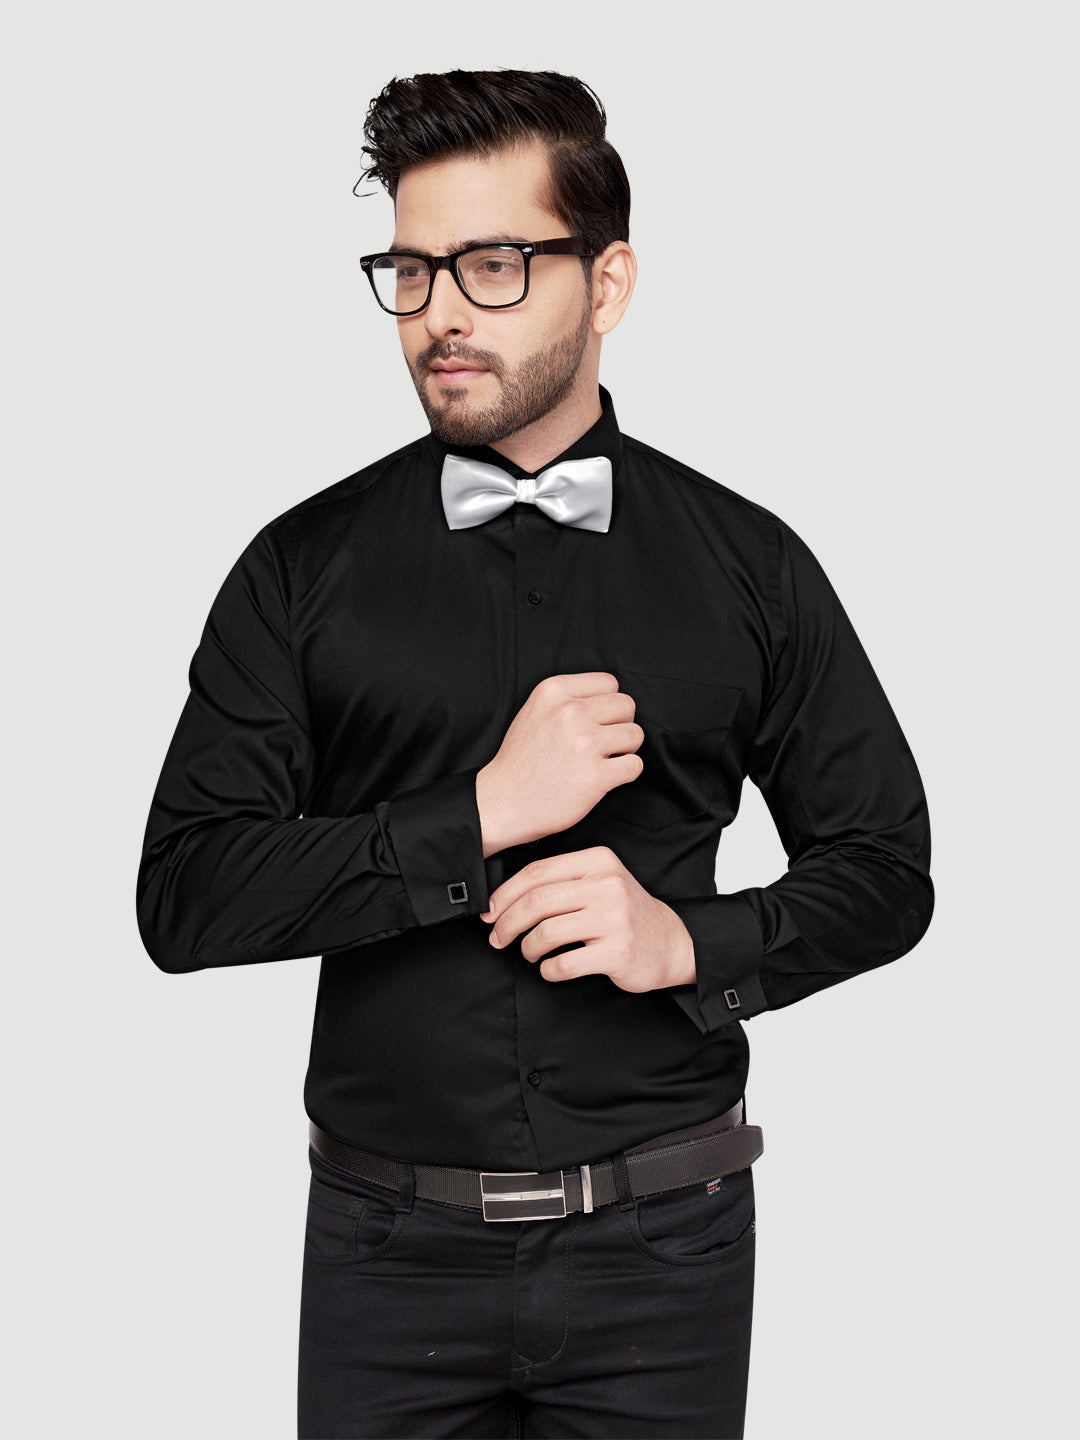 Black and White Shirts Men's Formal Cufflink Shirt Black w bow